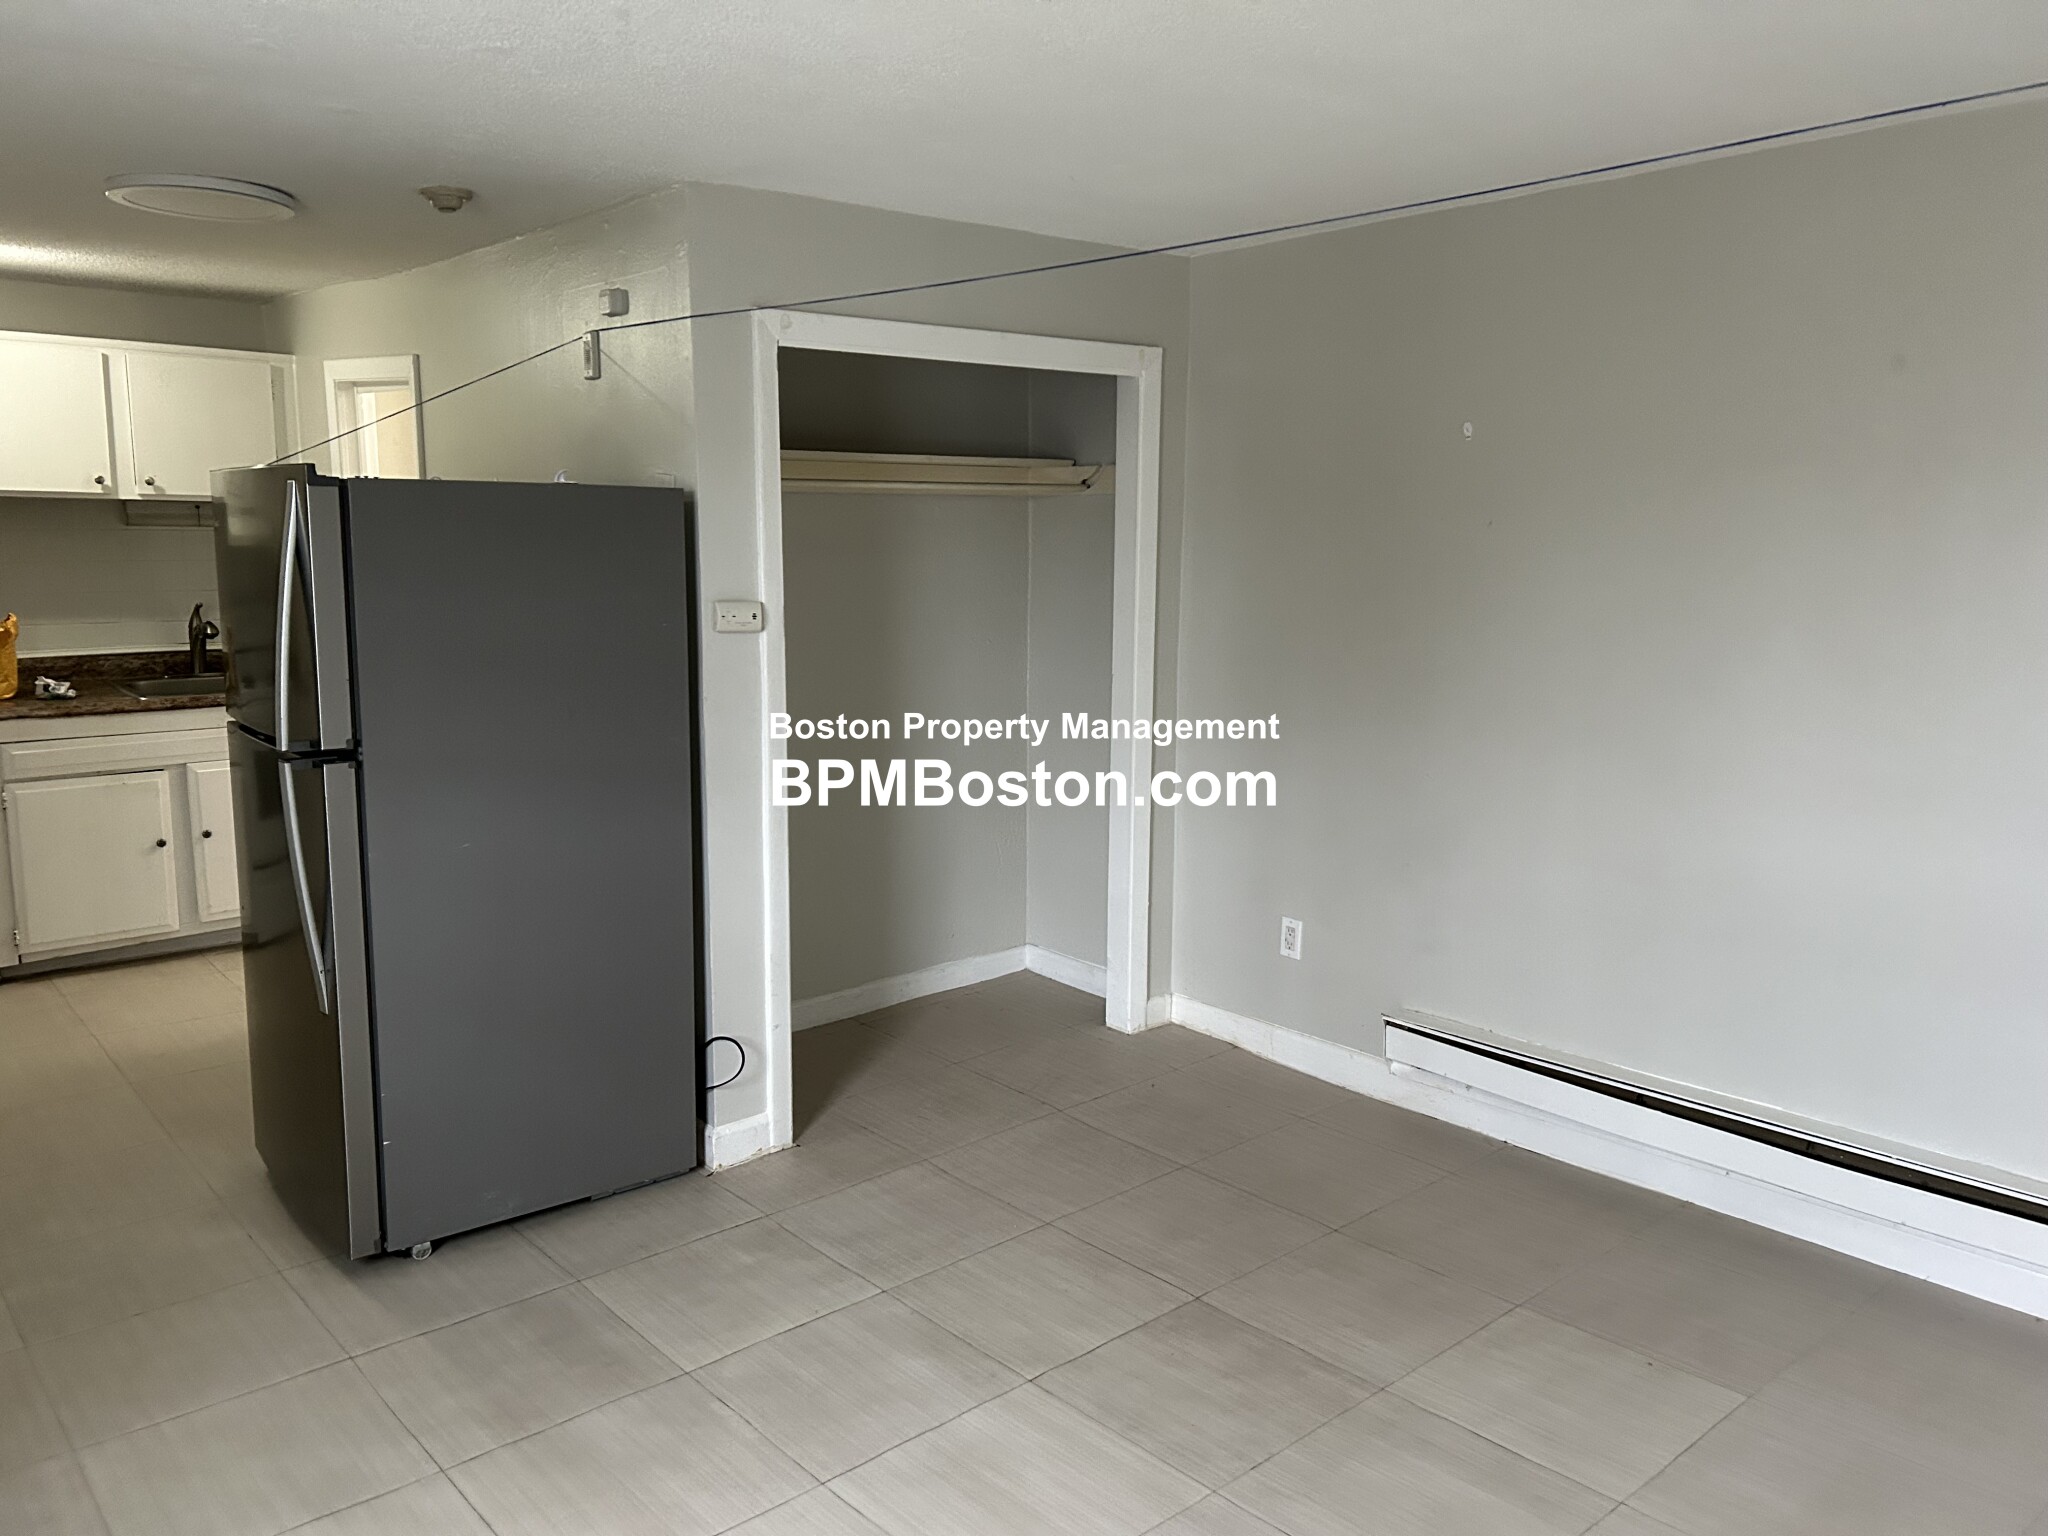 Photos of apartment on Beacon St.,Chelsea MA 02150